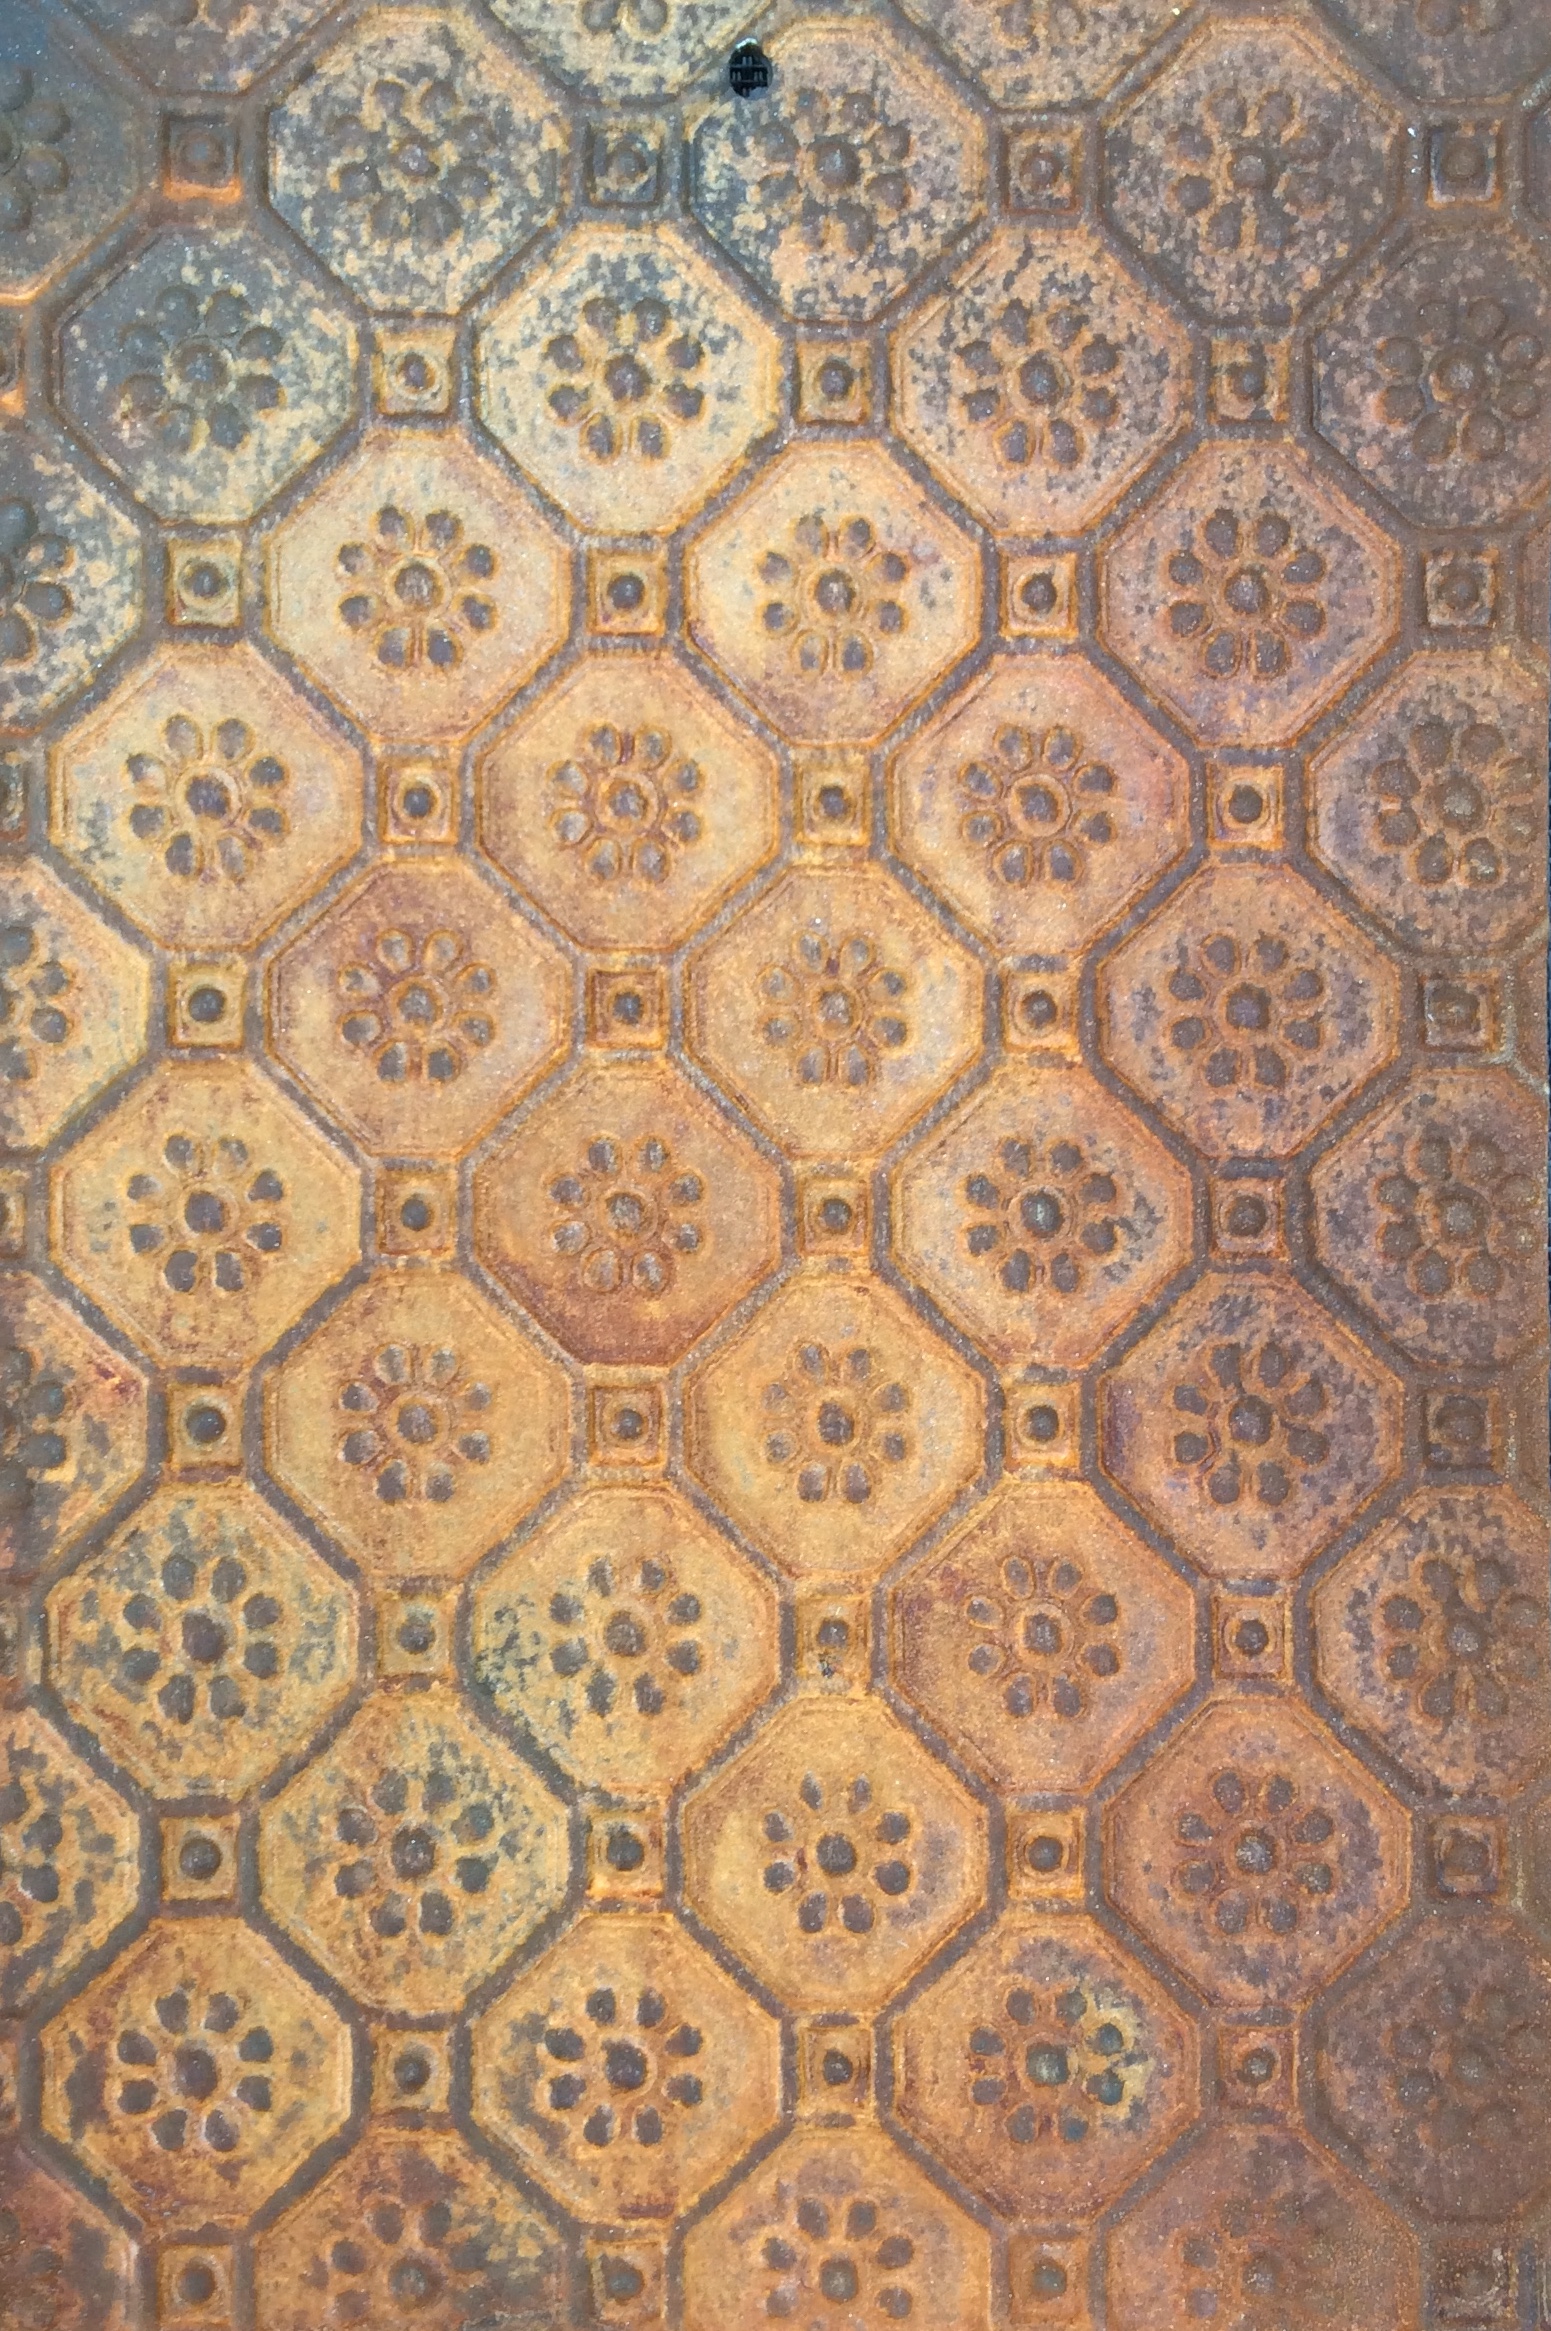 Byzantine design - rusted iron effect by Frank Holmes Ltd